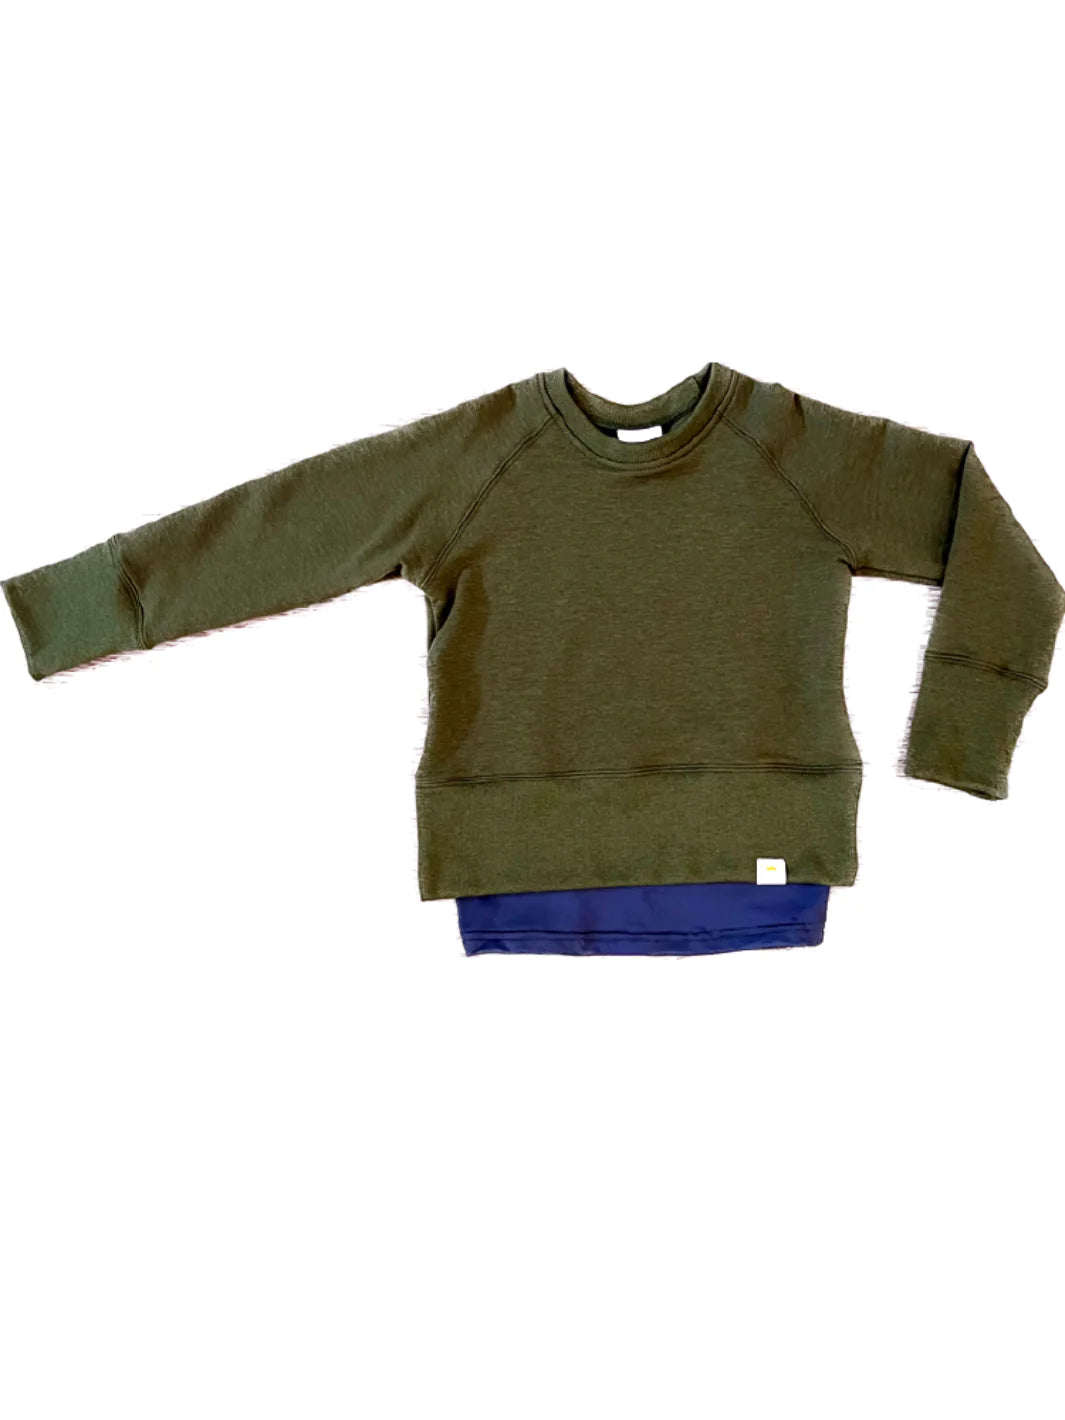 Moss Green Crewneck Sweater